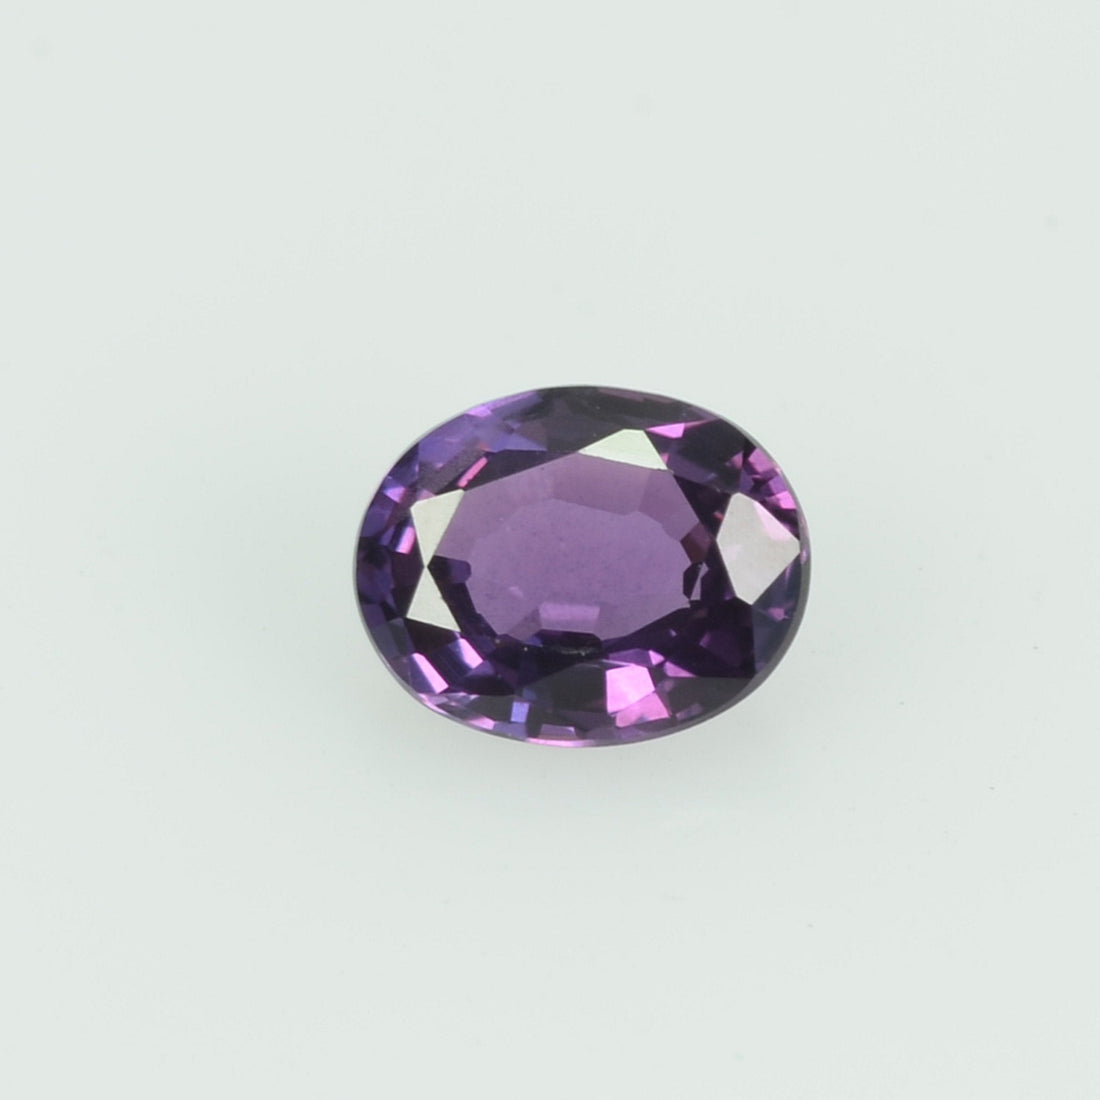 0.29 Cts Natural Lavender Sapphire Loose Gemstone Oval Cut - Thai Gems Export Ltd.